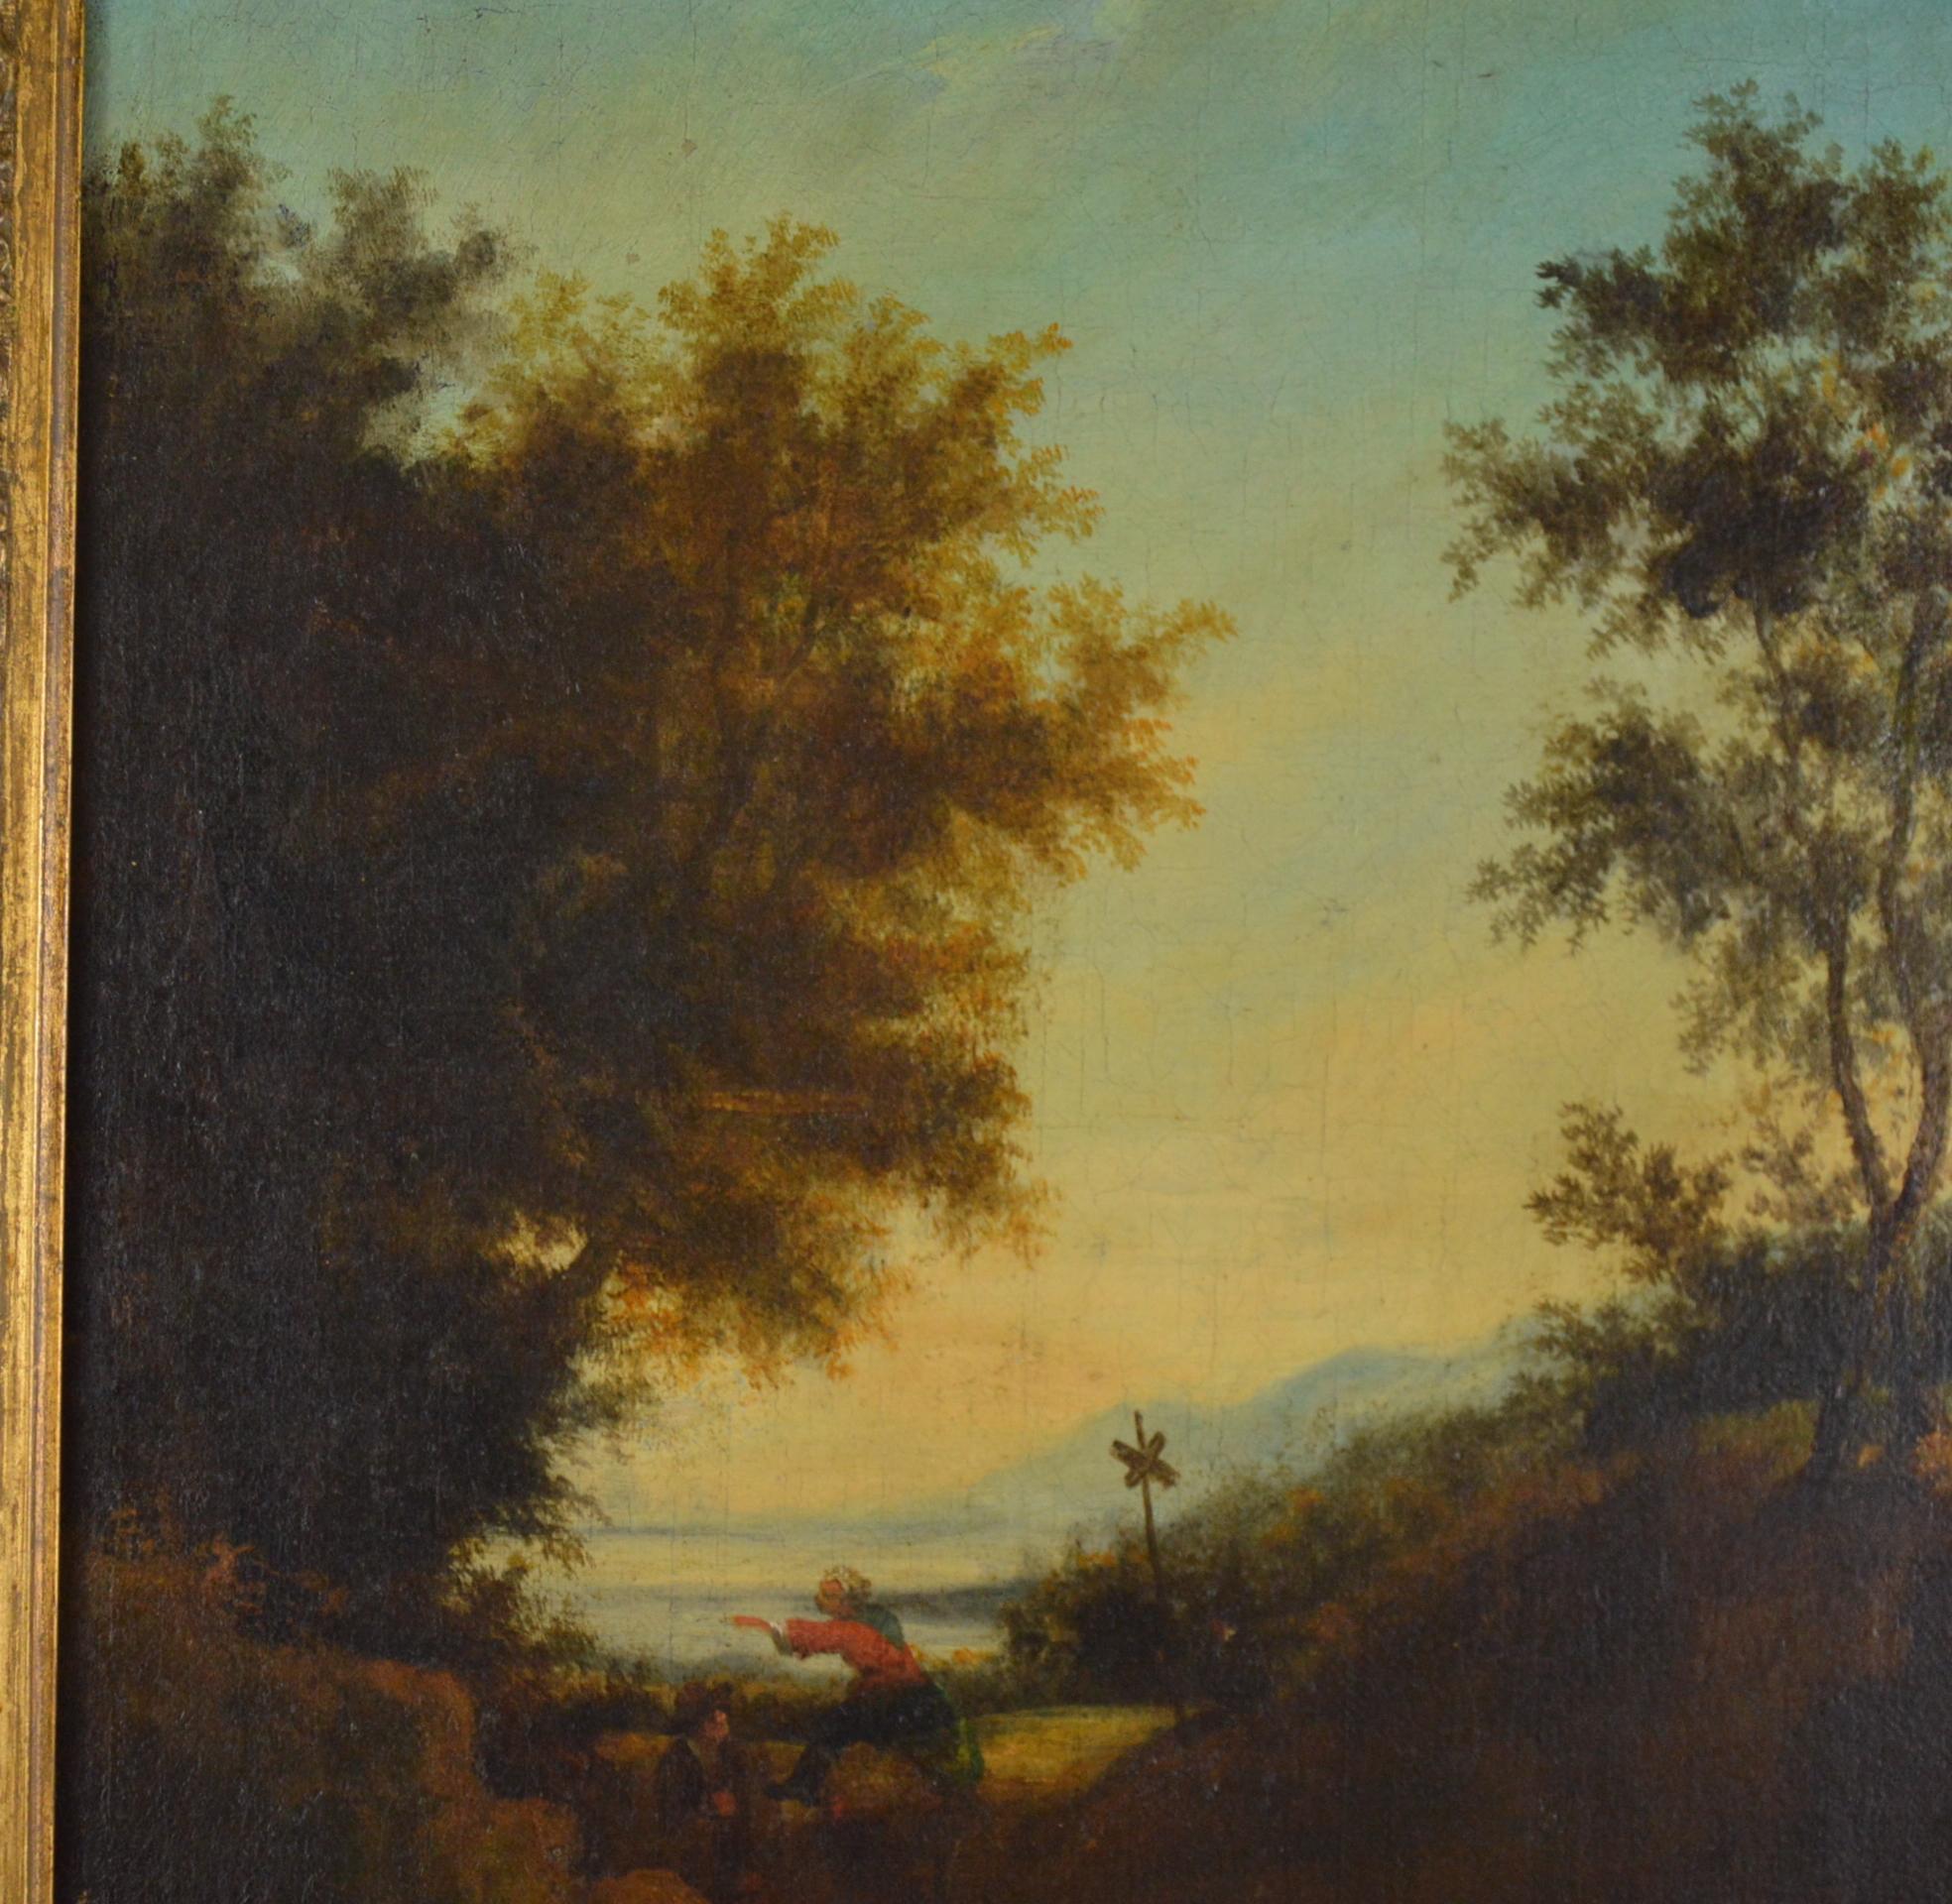 Landscape with Figures Painting Flemish School, 18th Century 1